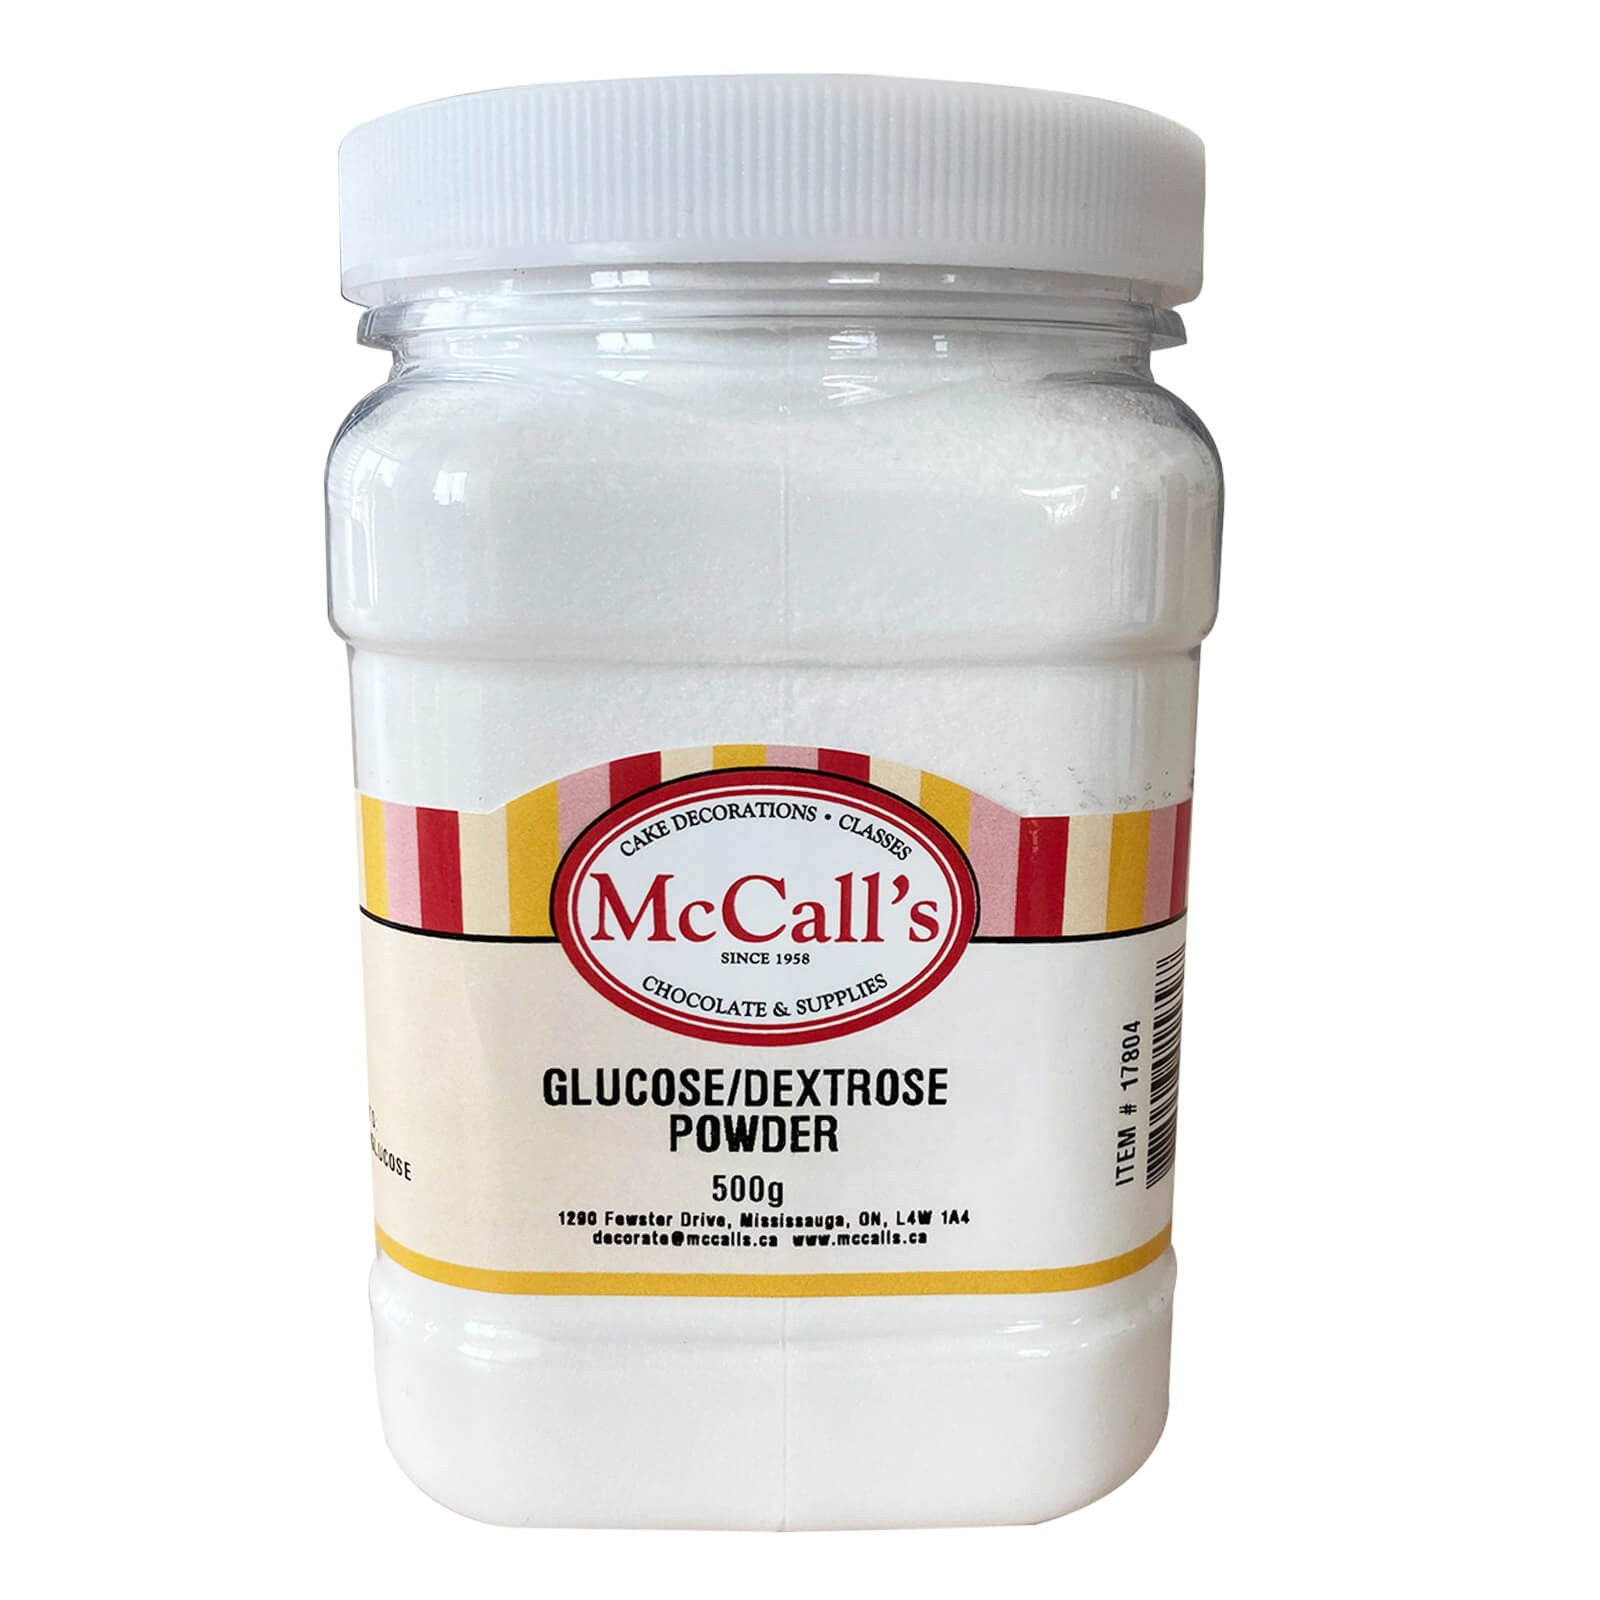 McCall's - Glucose / Dextrose Powder